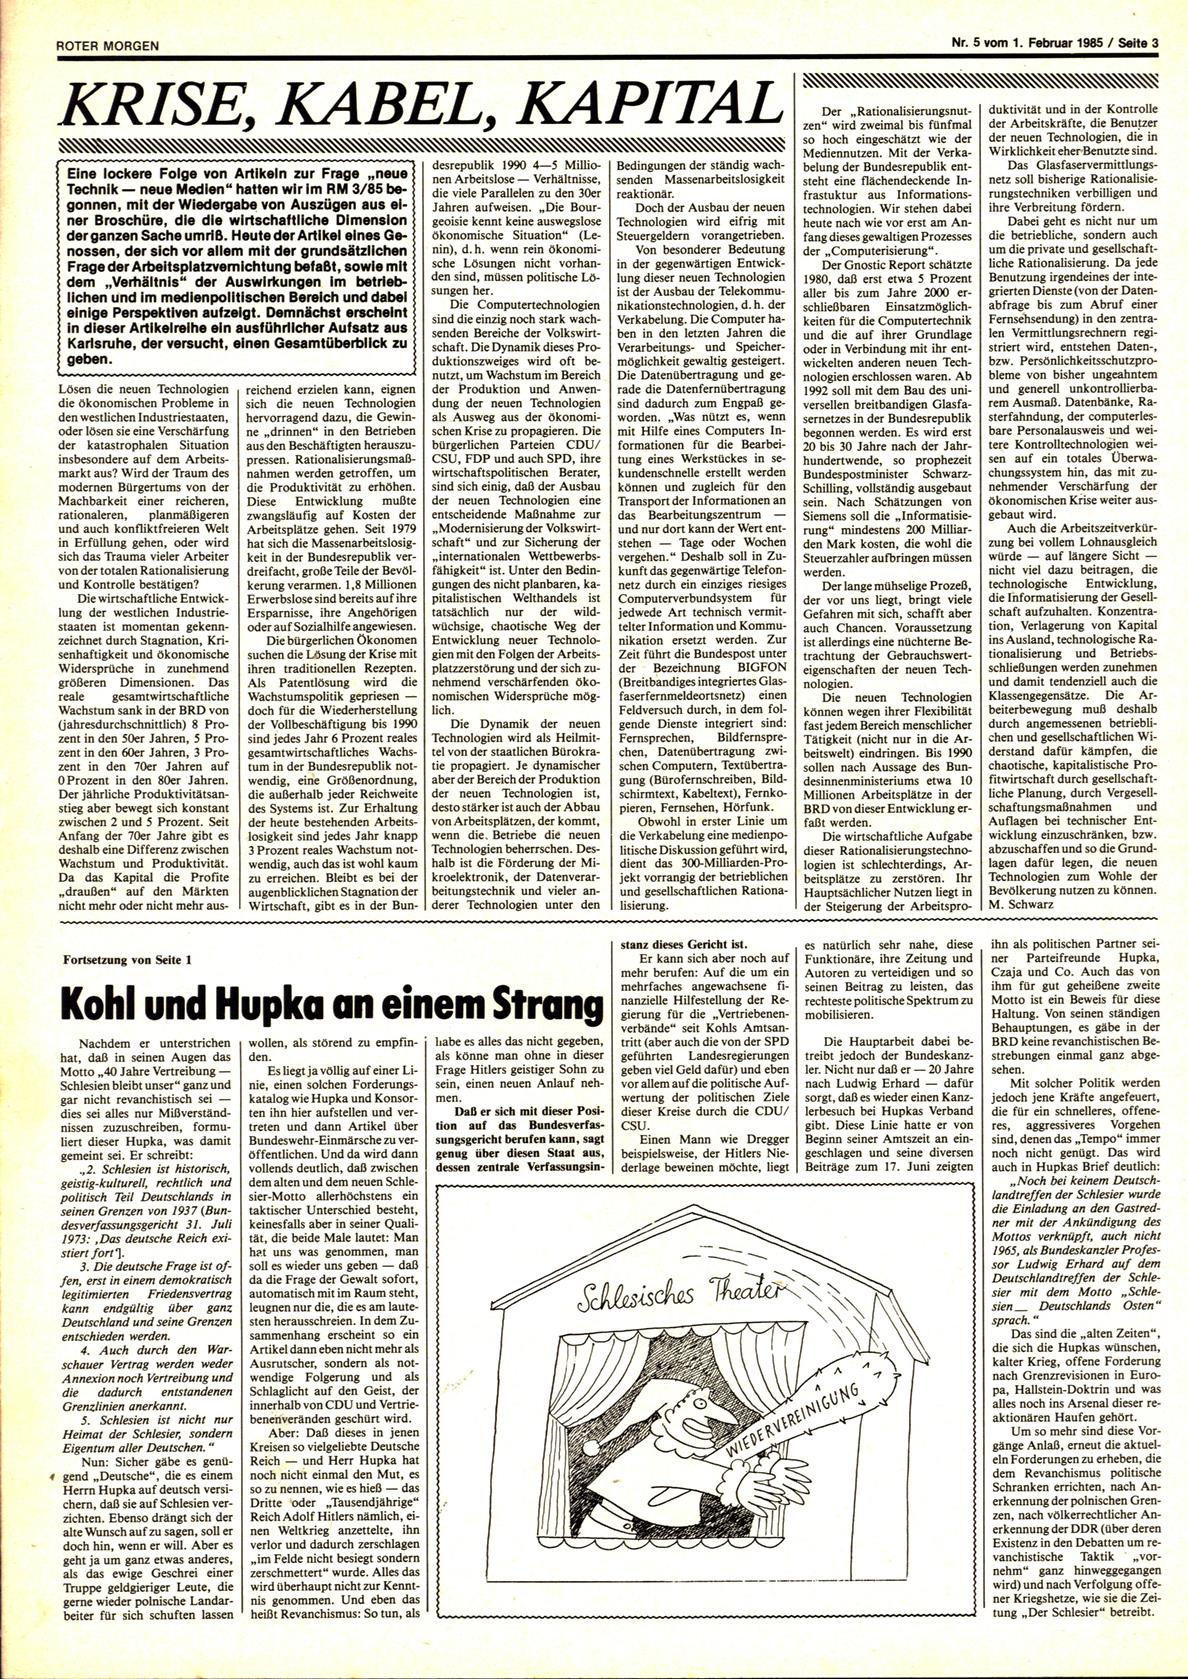 Roter Morgen, 19. Jg., 1. Februar 1985, Nr. 5, Seite 3